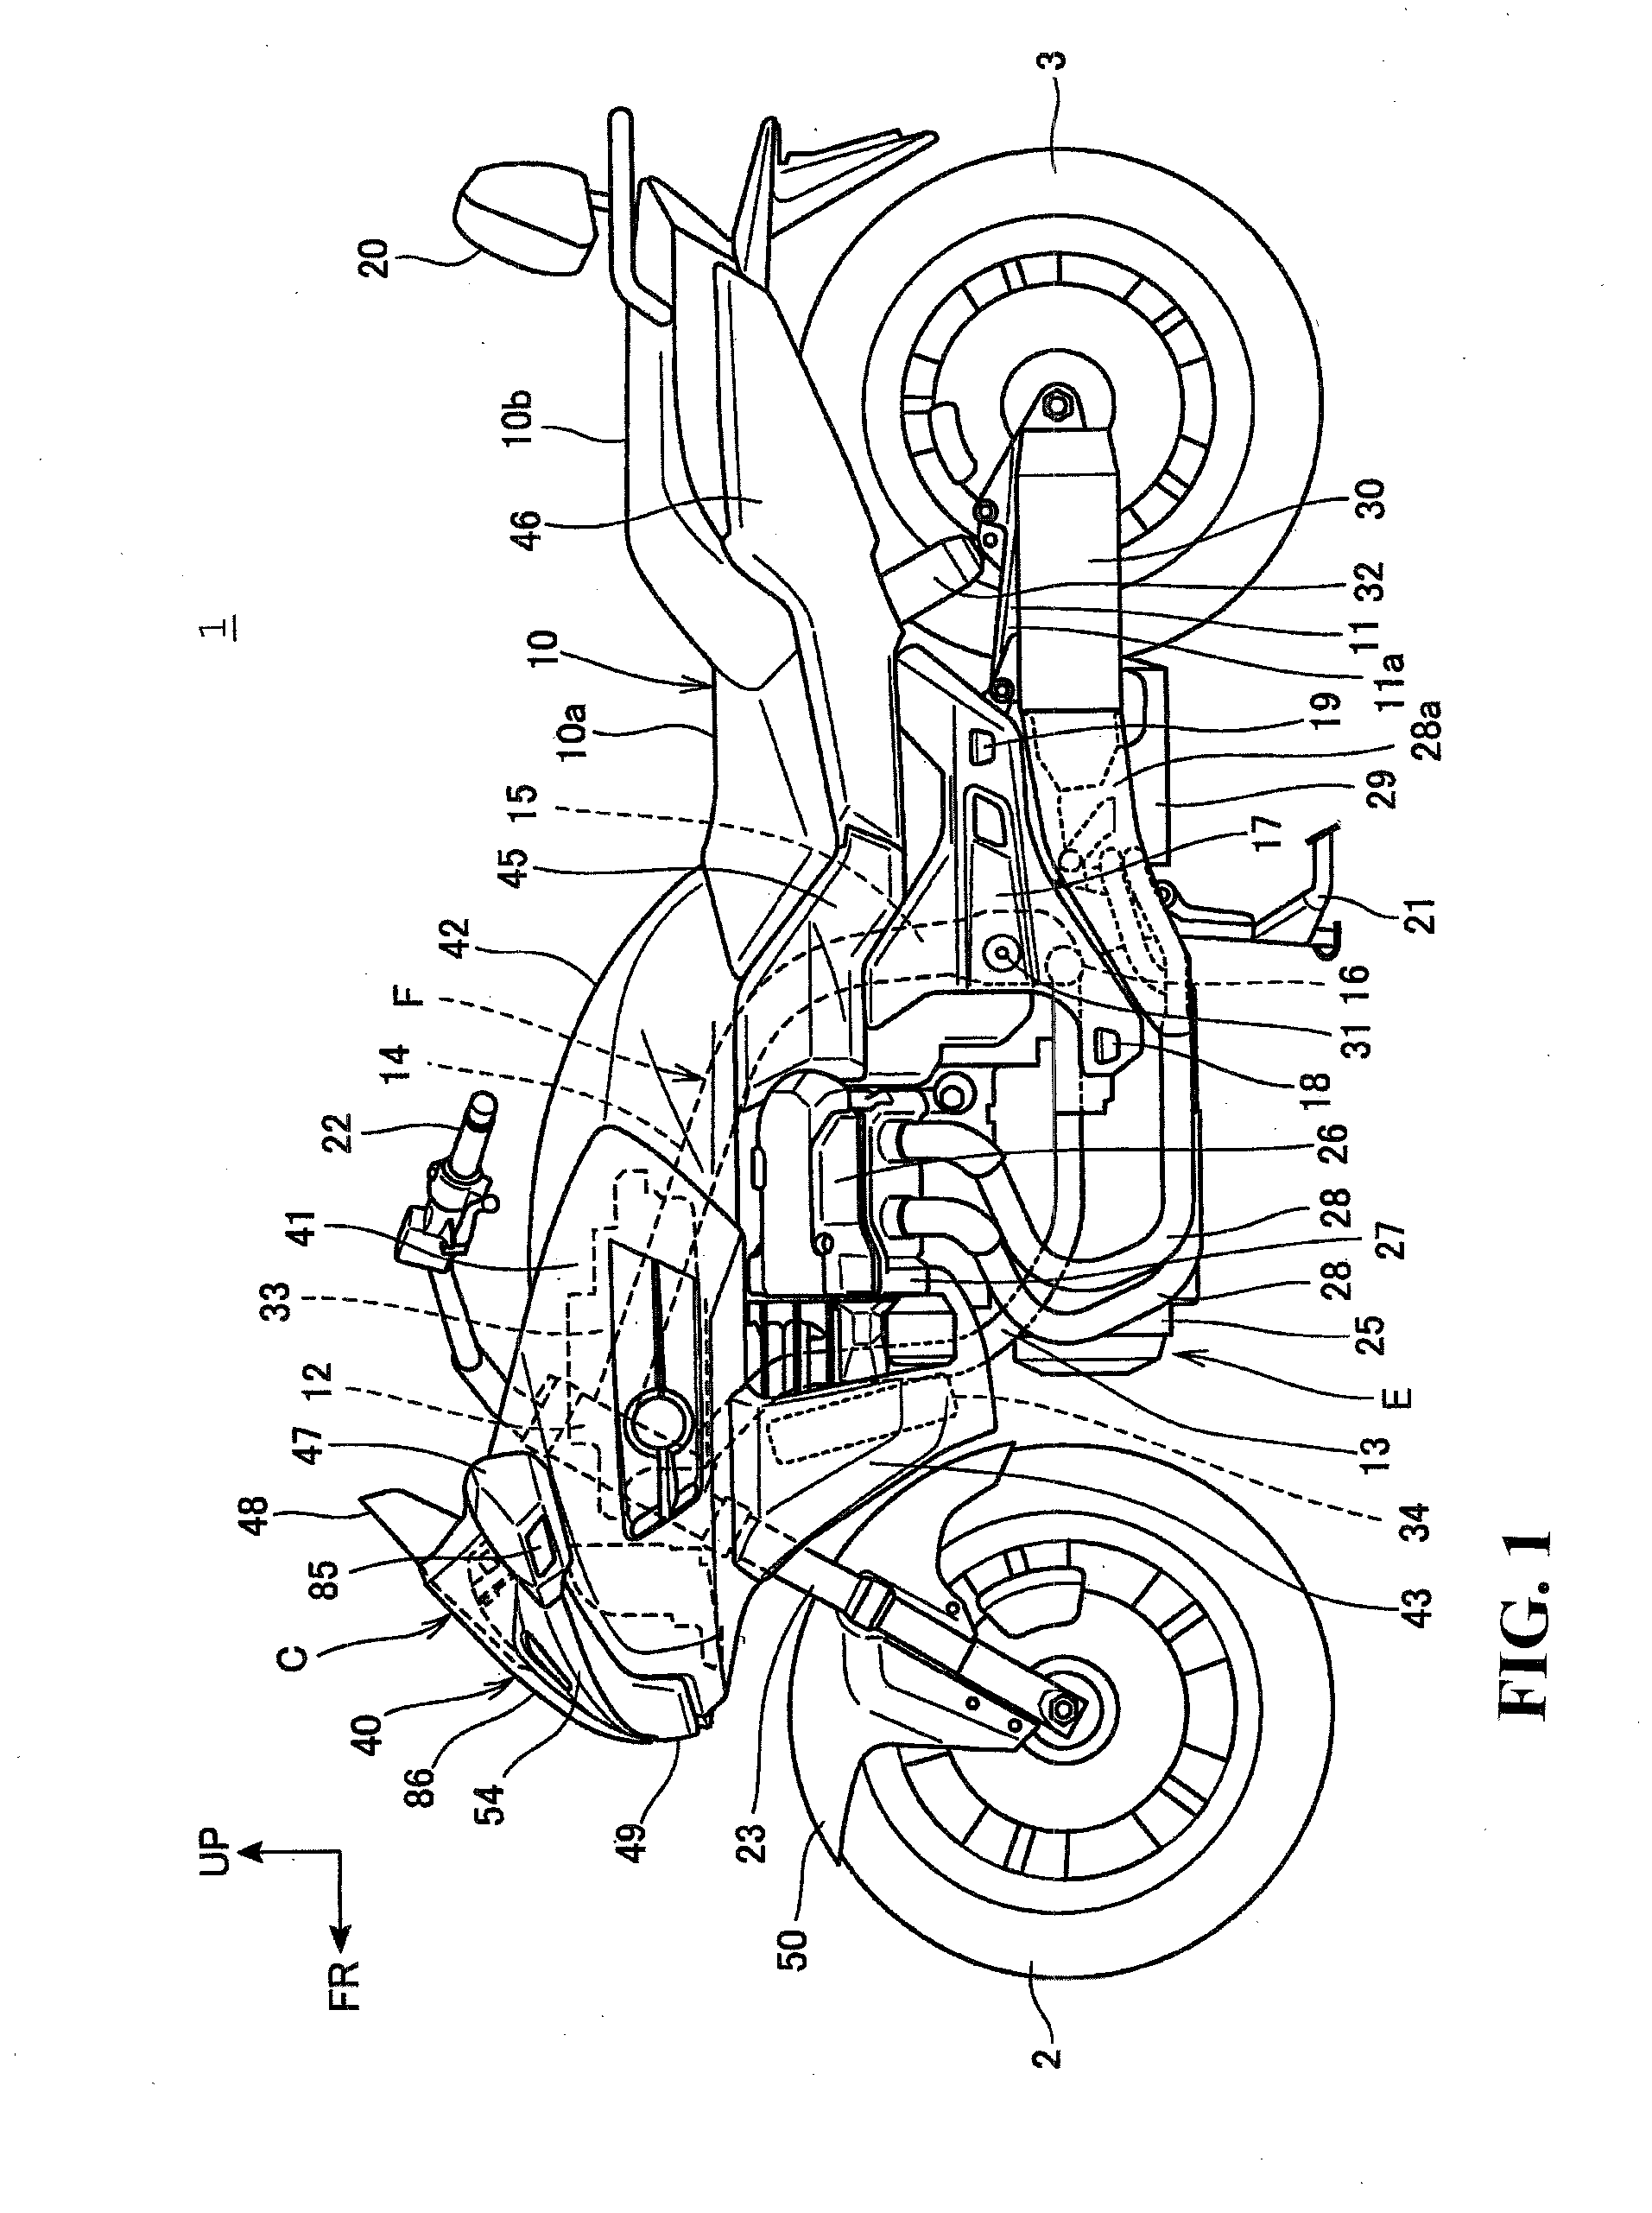 Vehicle body front structure of saddle-type vehicle